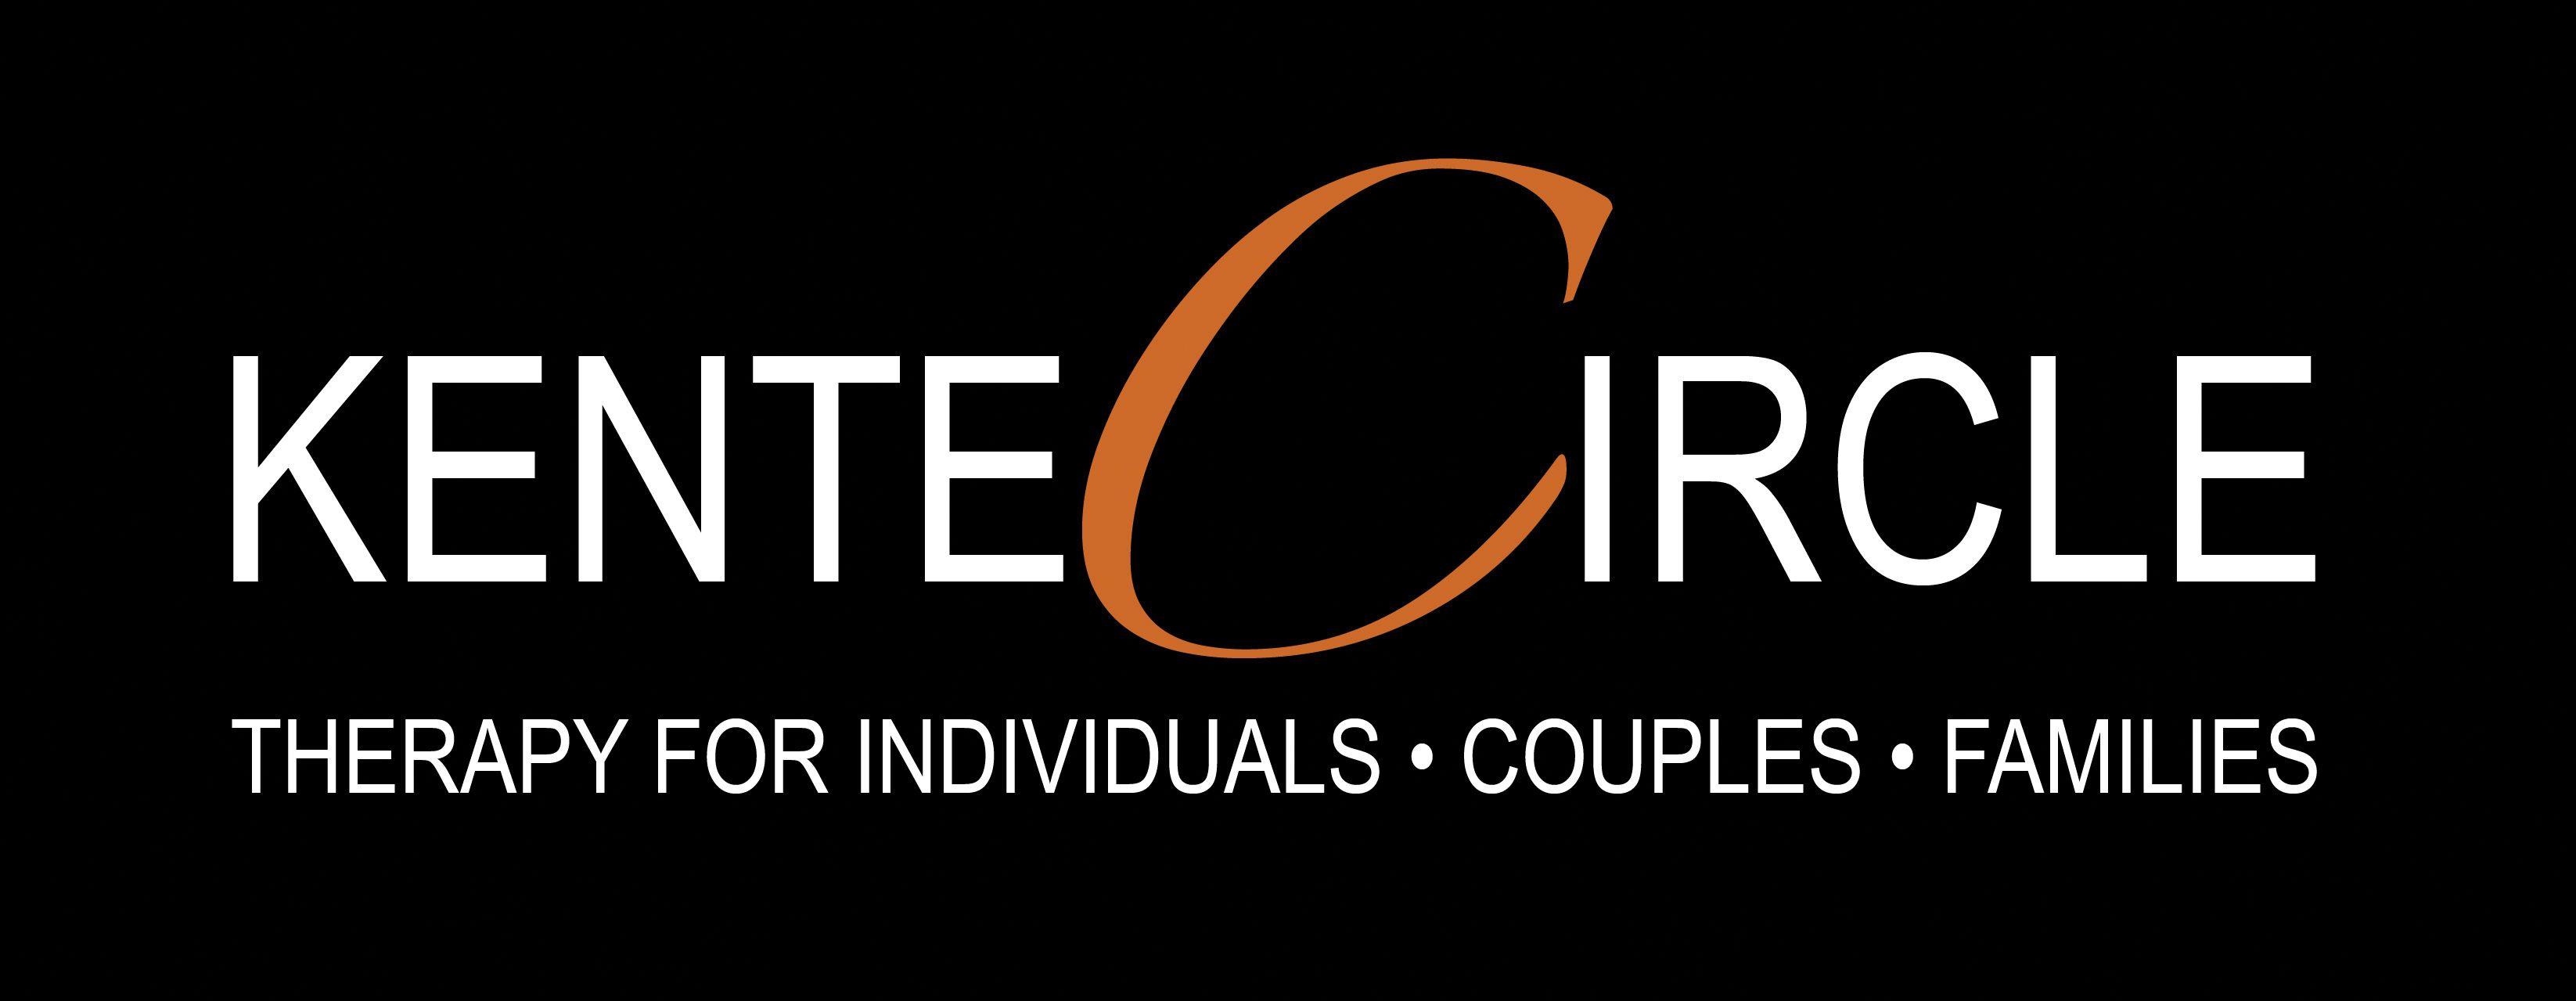 Circle Therapy Logo - Kente Circle Therapists